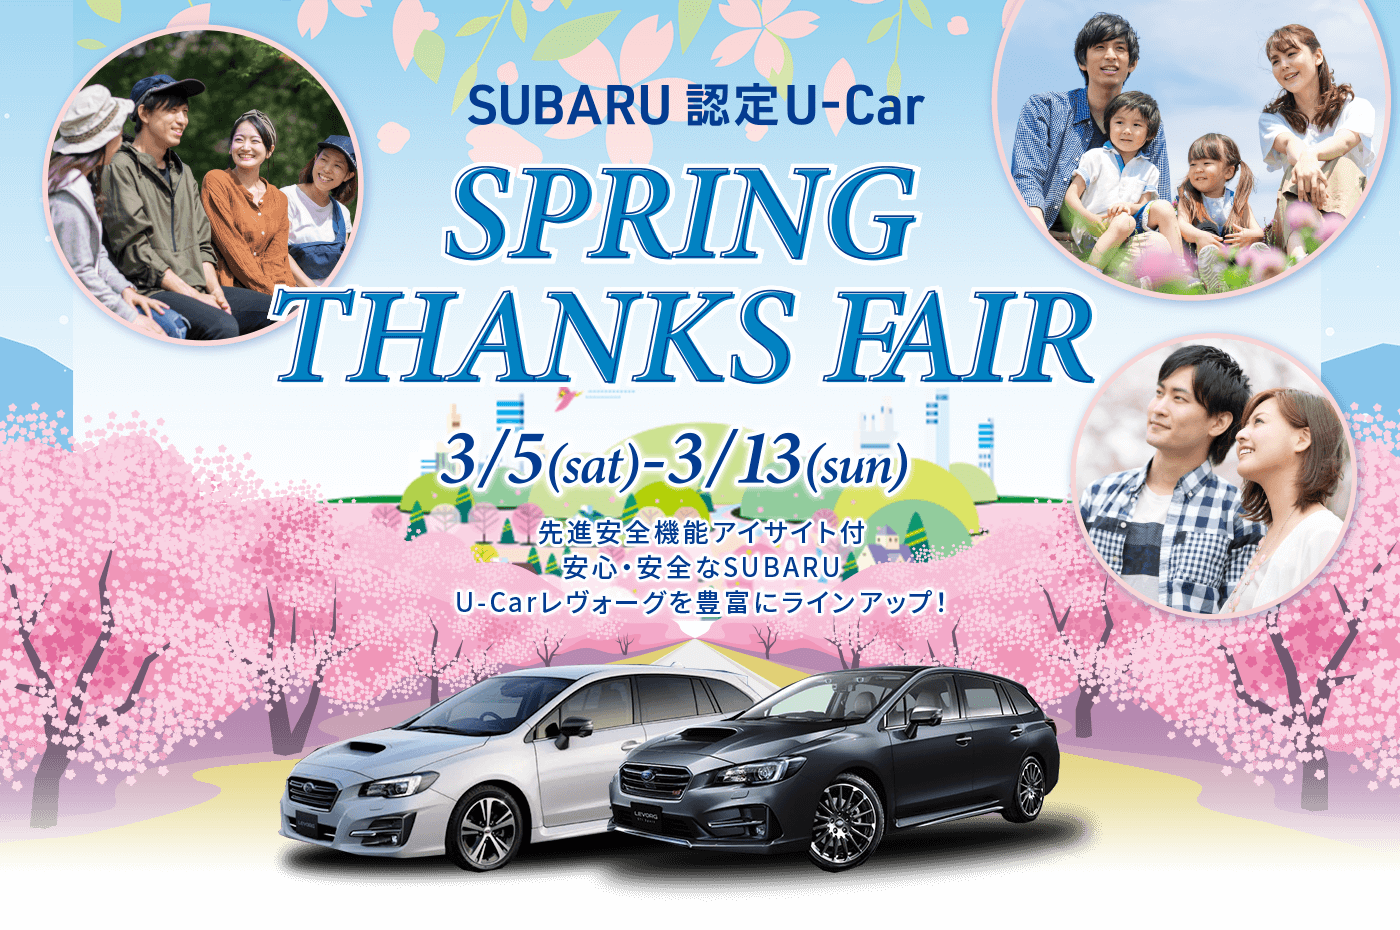 SUBARU 認定U-Car SPRING THANKS FAIR 3/5(sat)-3/13(sun) 先進安全機能アイサイト付 安心・安全なSUBARU U-Carレヴォーグを豊富にラインアップ！